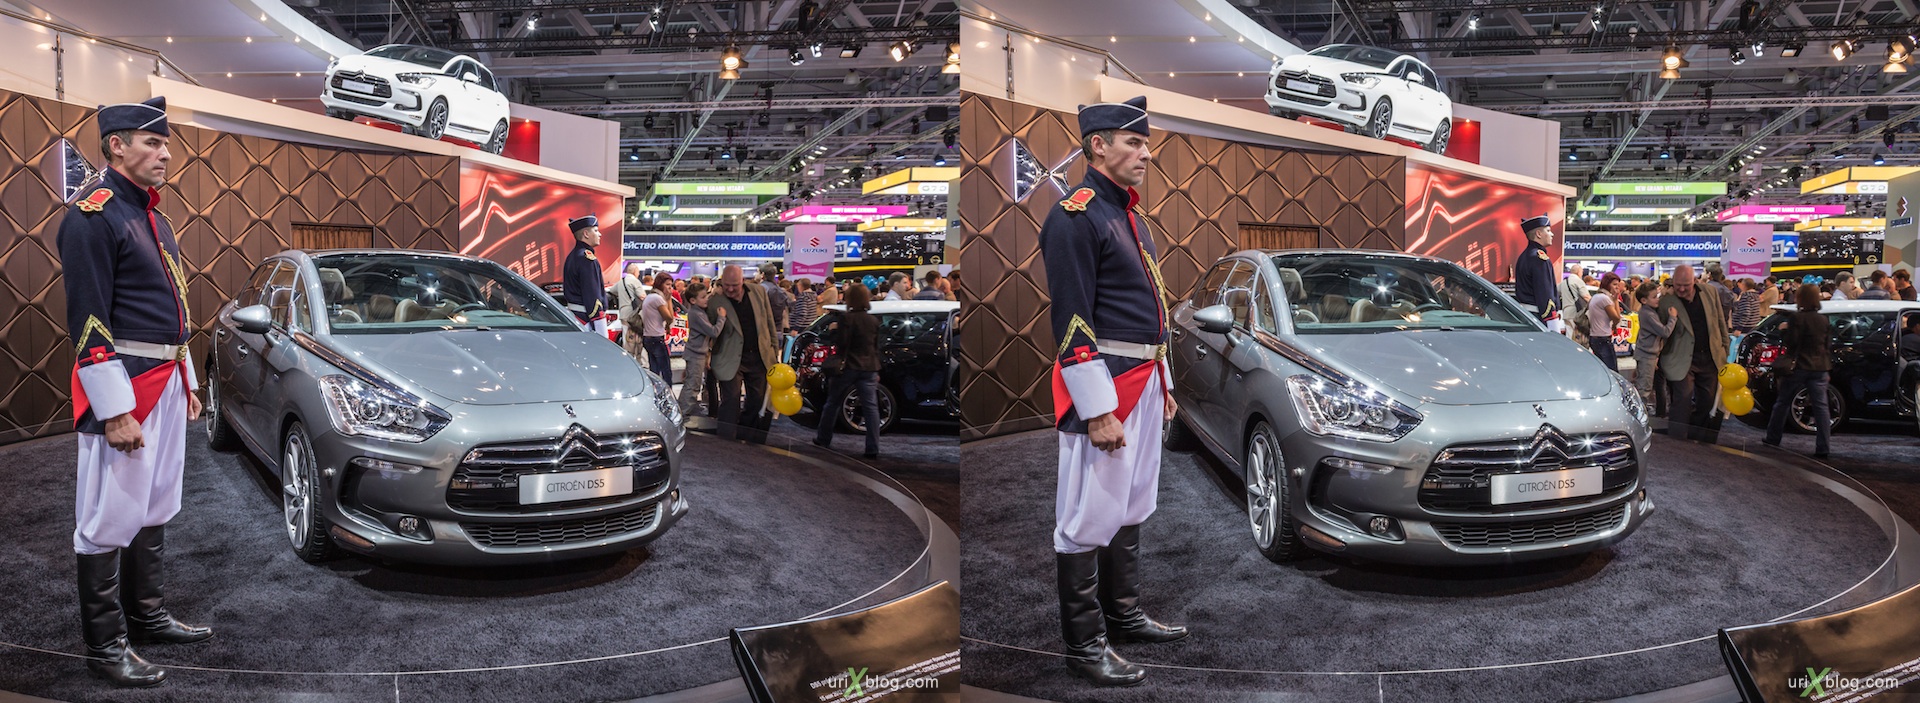 2012, Citroen DS5, Moscow International Automobile Salon, auto show, 3D, stereo pair, cross-eyed, crossview